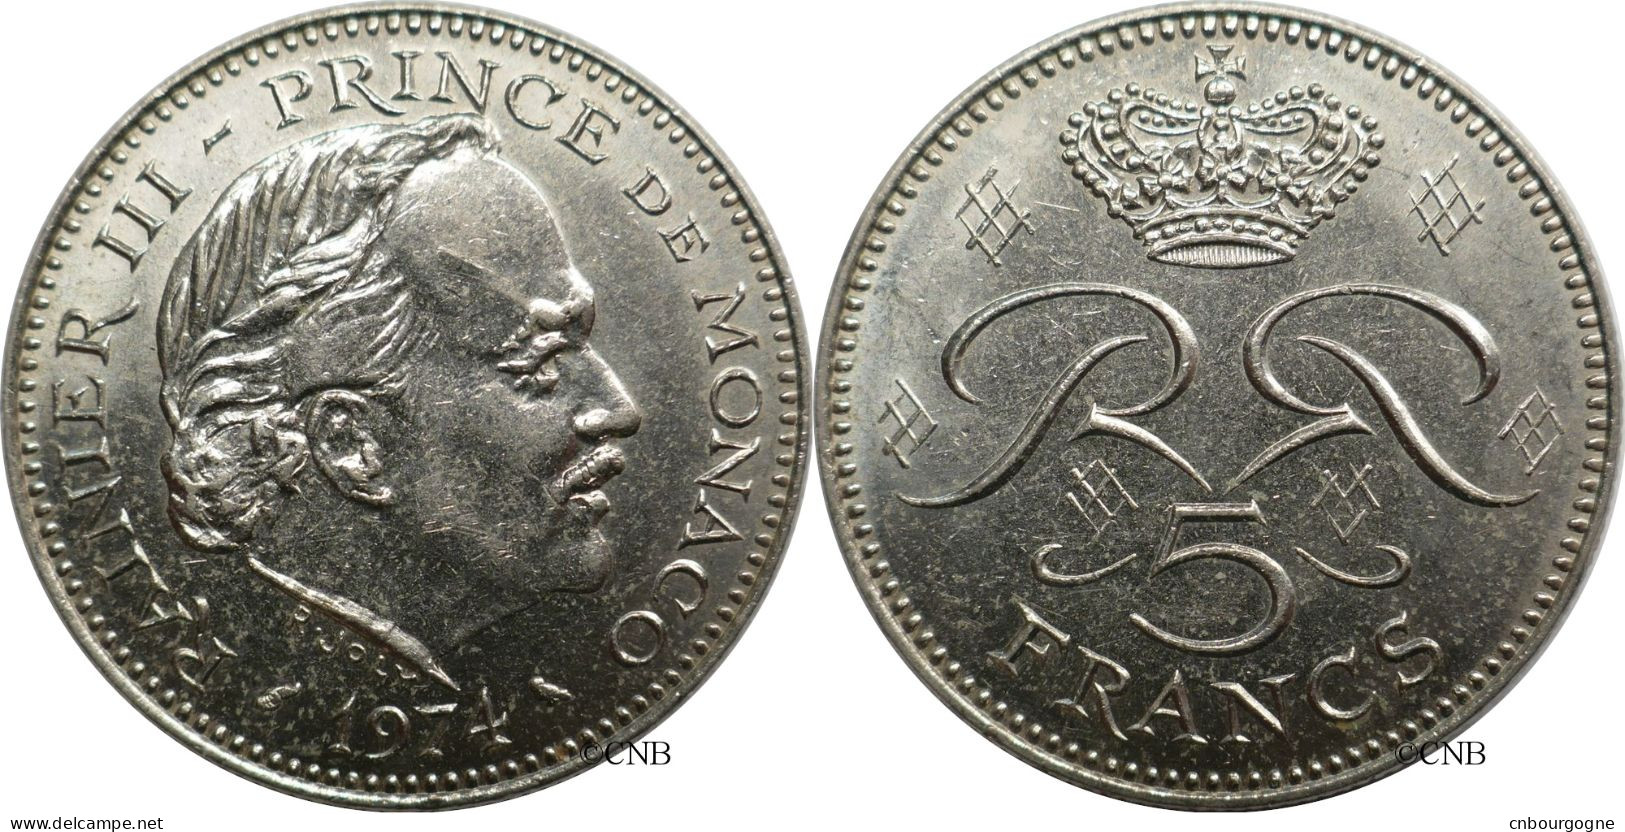 Monaco - Principauté - Rainier III - 5 Francs 1974 - SUP/AU55 - Mon6649 - 1960-2001 Neue Francs